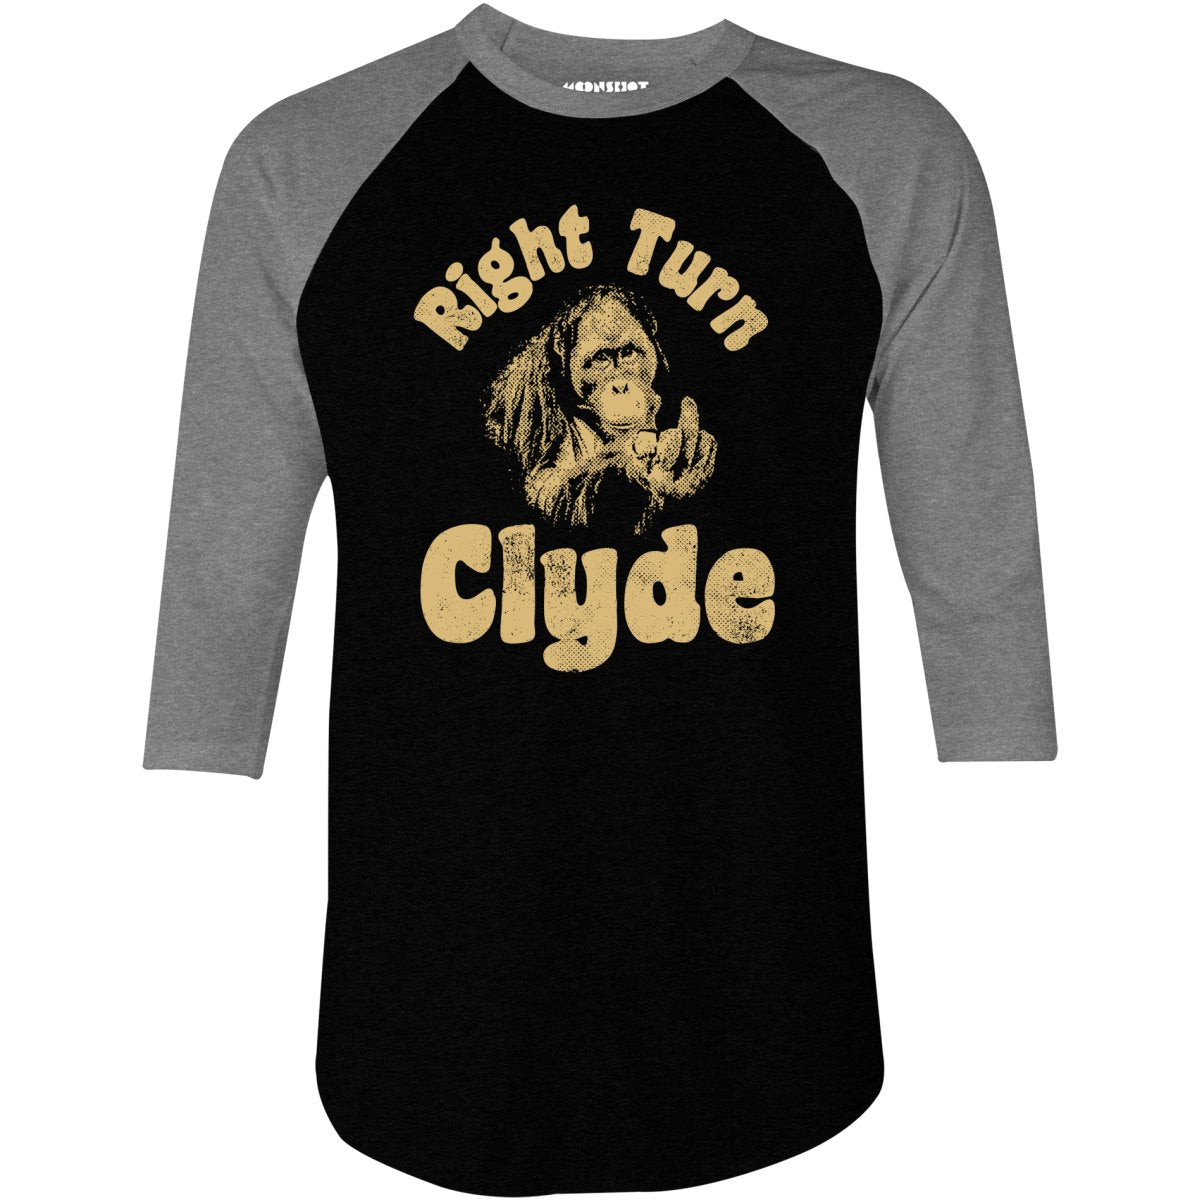 Right Turn Clyde - 3/4 Sleeve Raglan T-Shirt